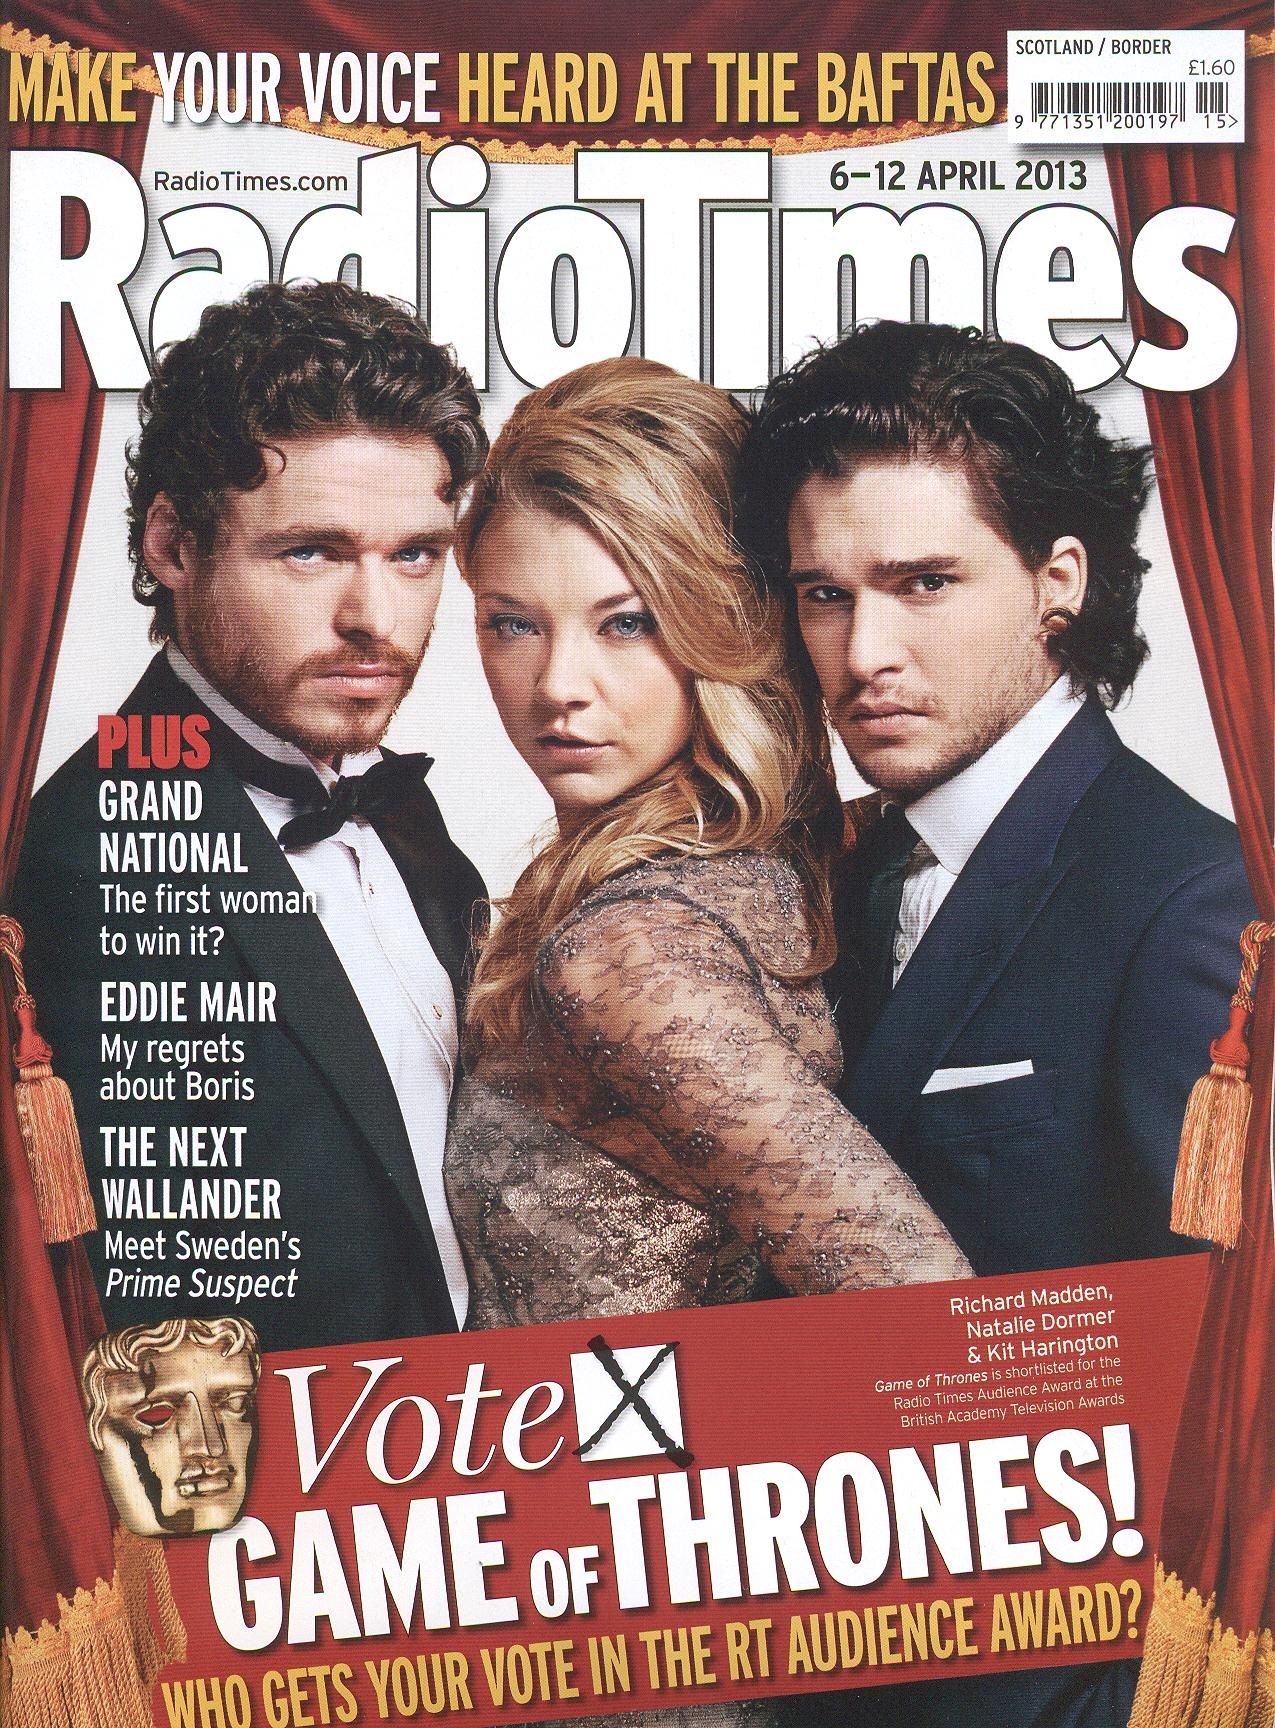 Game of Thrones - Radio Times Magazine Photoshoot 20131275 x 1728